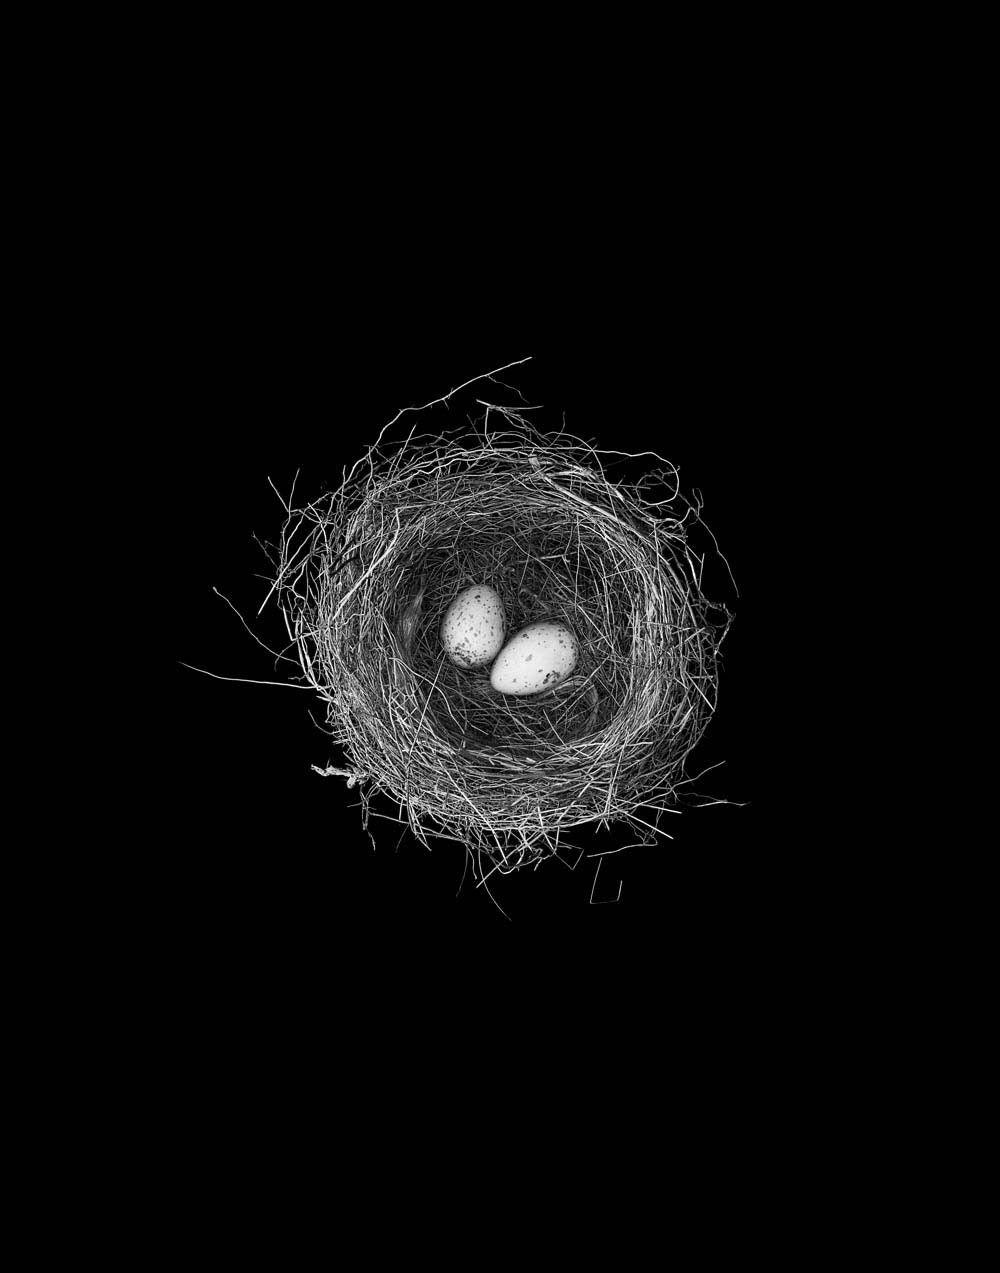 Birdsnest Black and White Logo - birds nest | nests, feathers | Birds, Nest, Black, white birds